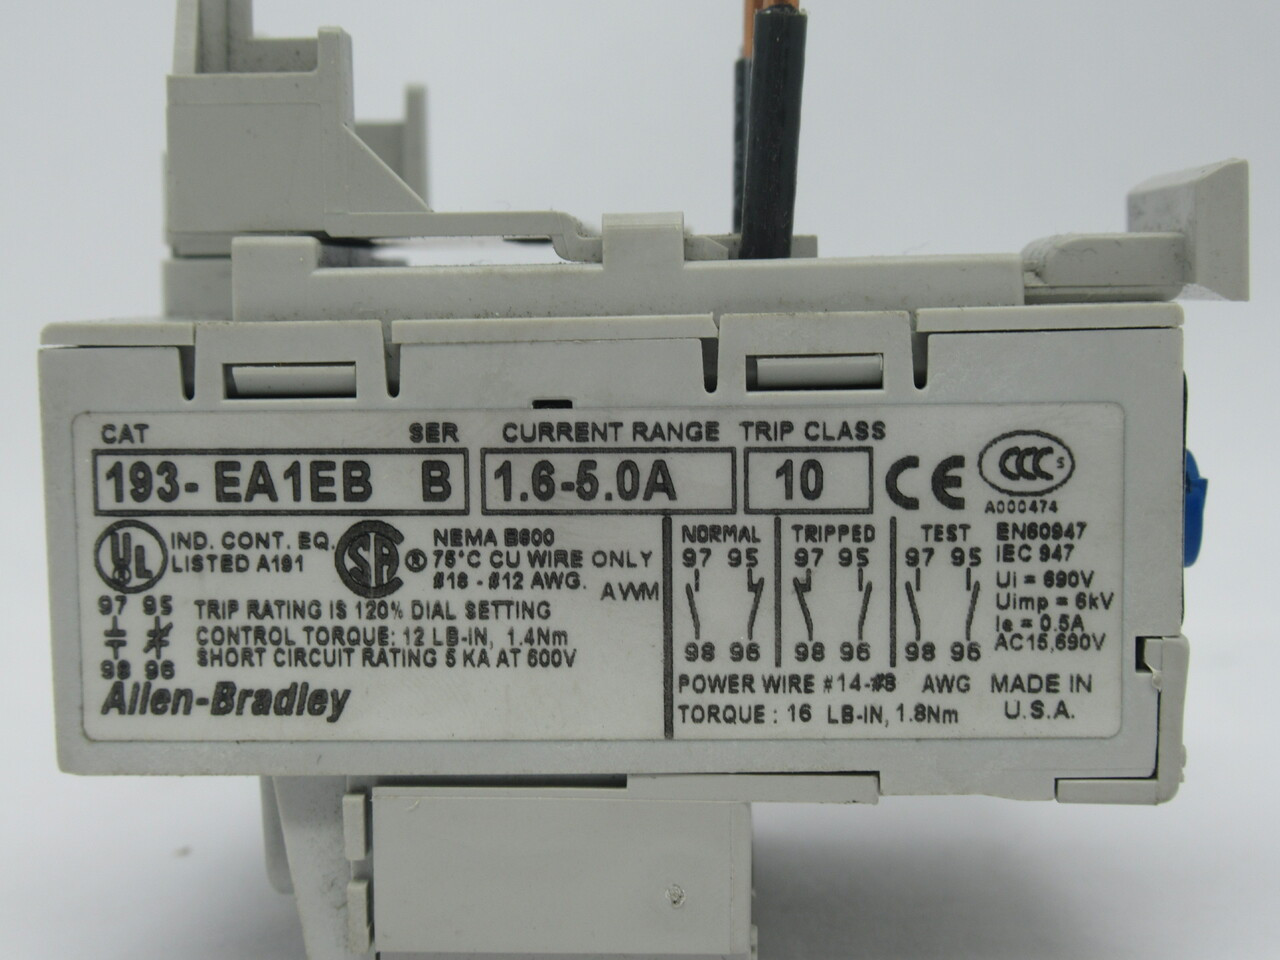 Allen-Bradley 193-EA1EB Overload Relay Ser. B 1.6-5.0A USED